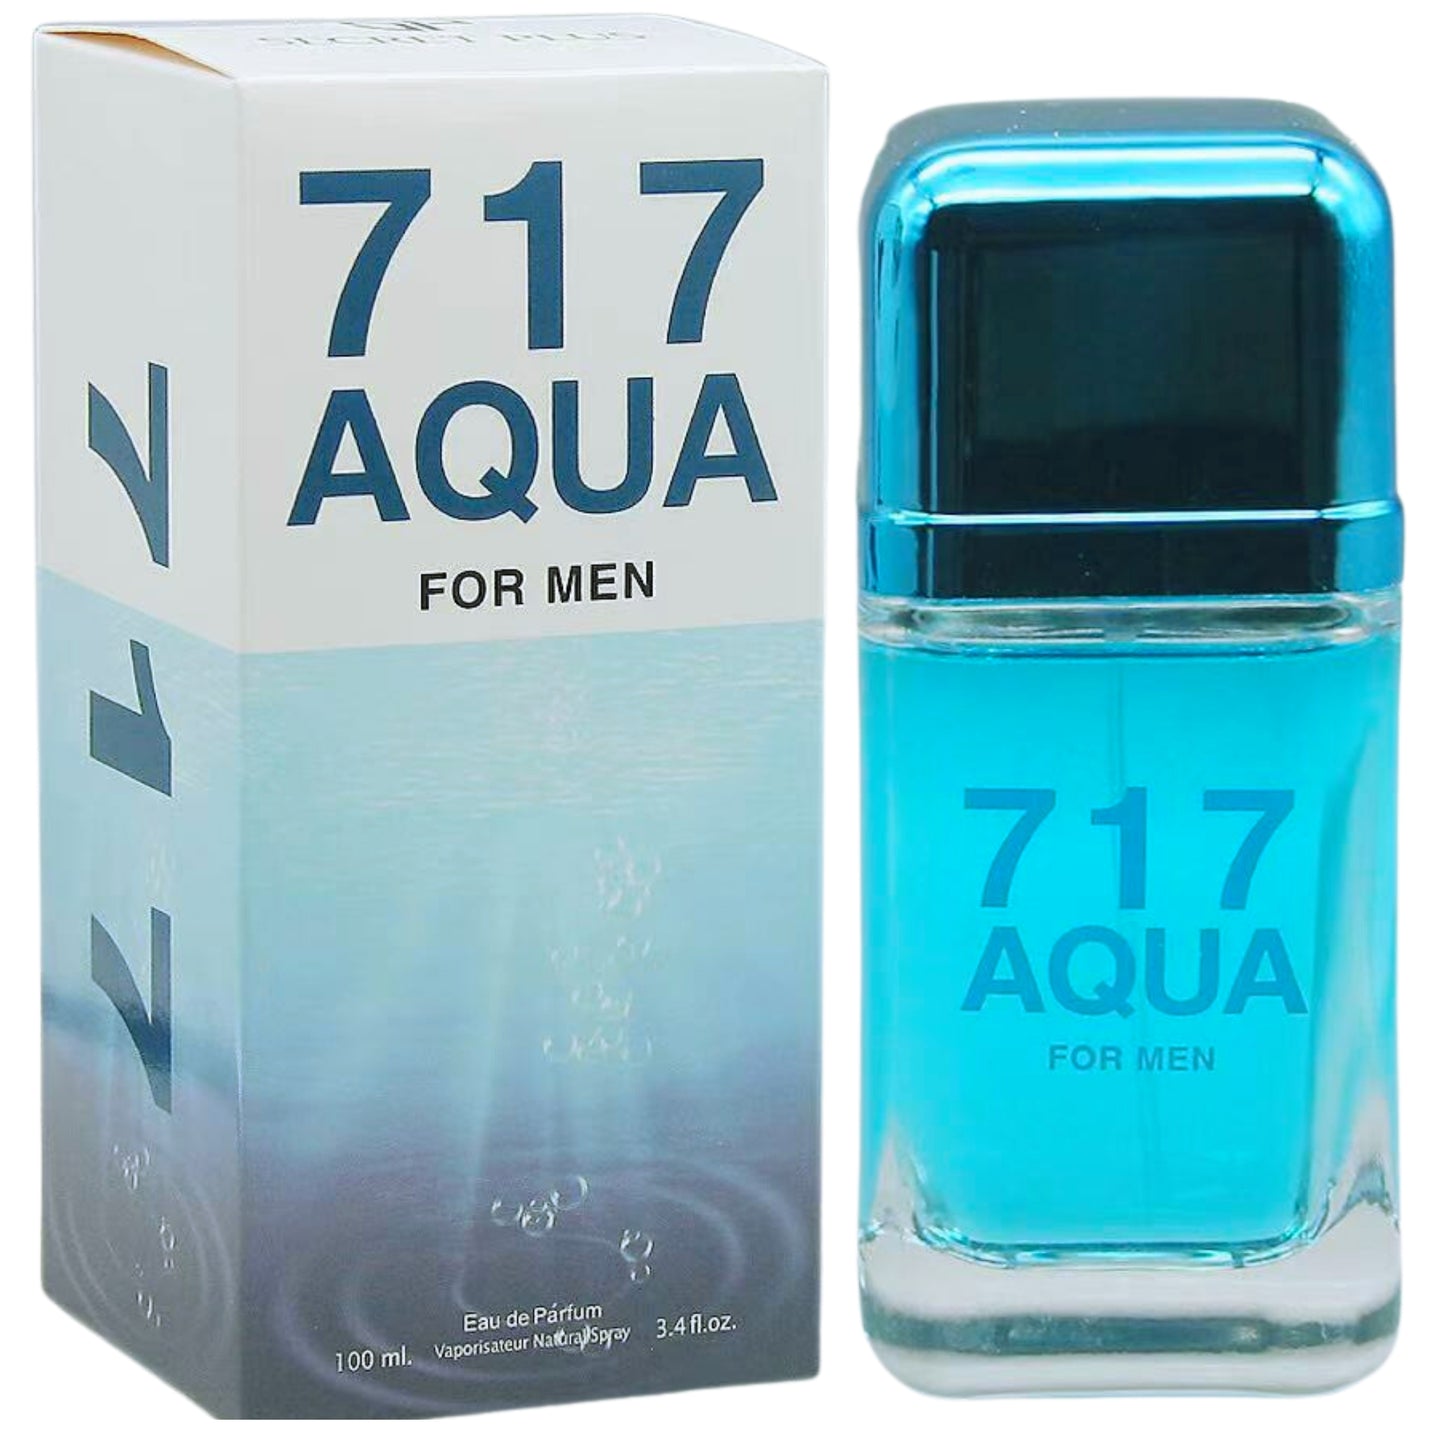 717 Aqua for Men Eau de toilette Perfume 3.4oz